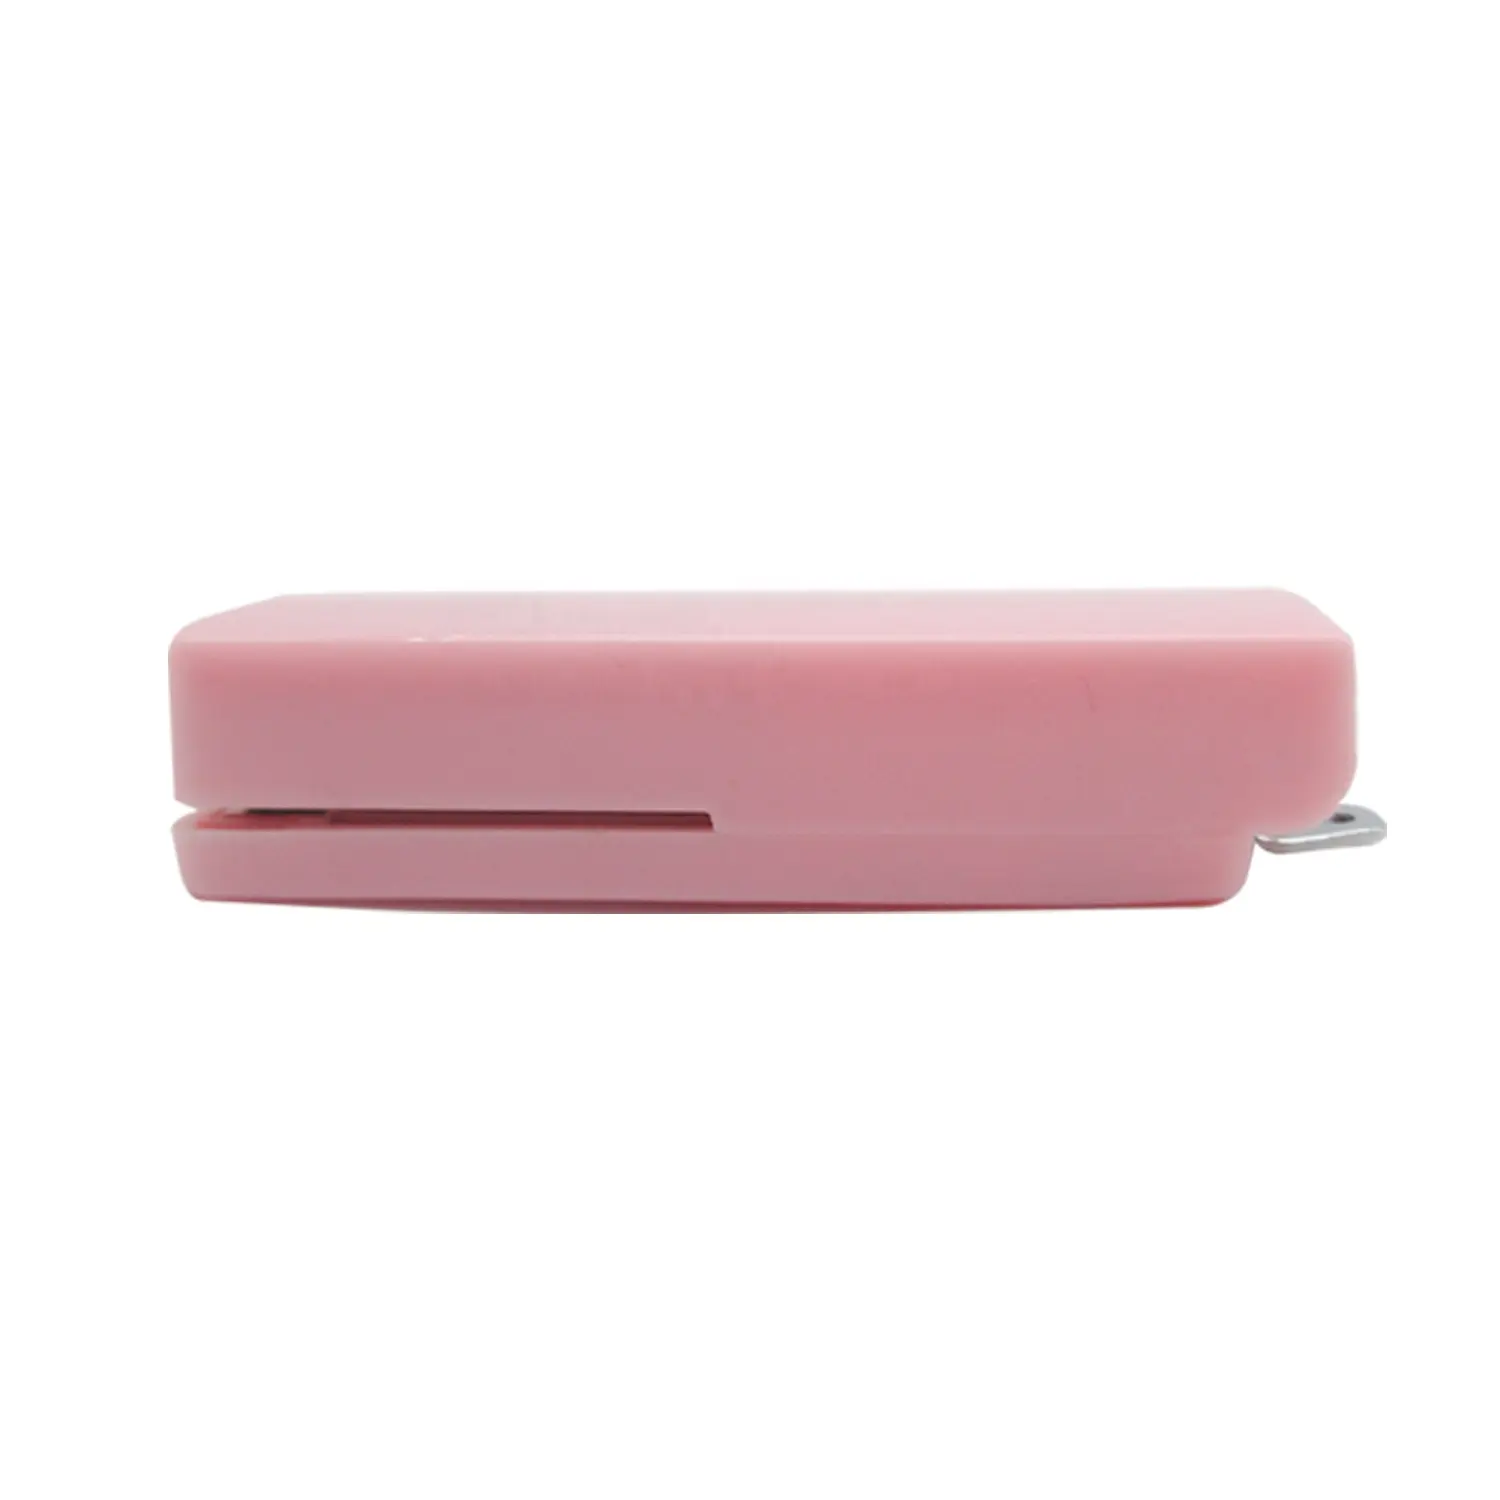 Stapler With Staple Remover Office Student Plastic No.10 Staple Cute Small Pocket Pink Stapler 10 Sheets Business Travel Mini Stapler With Staple Remover